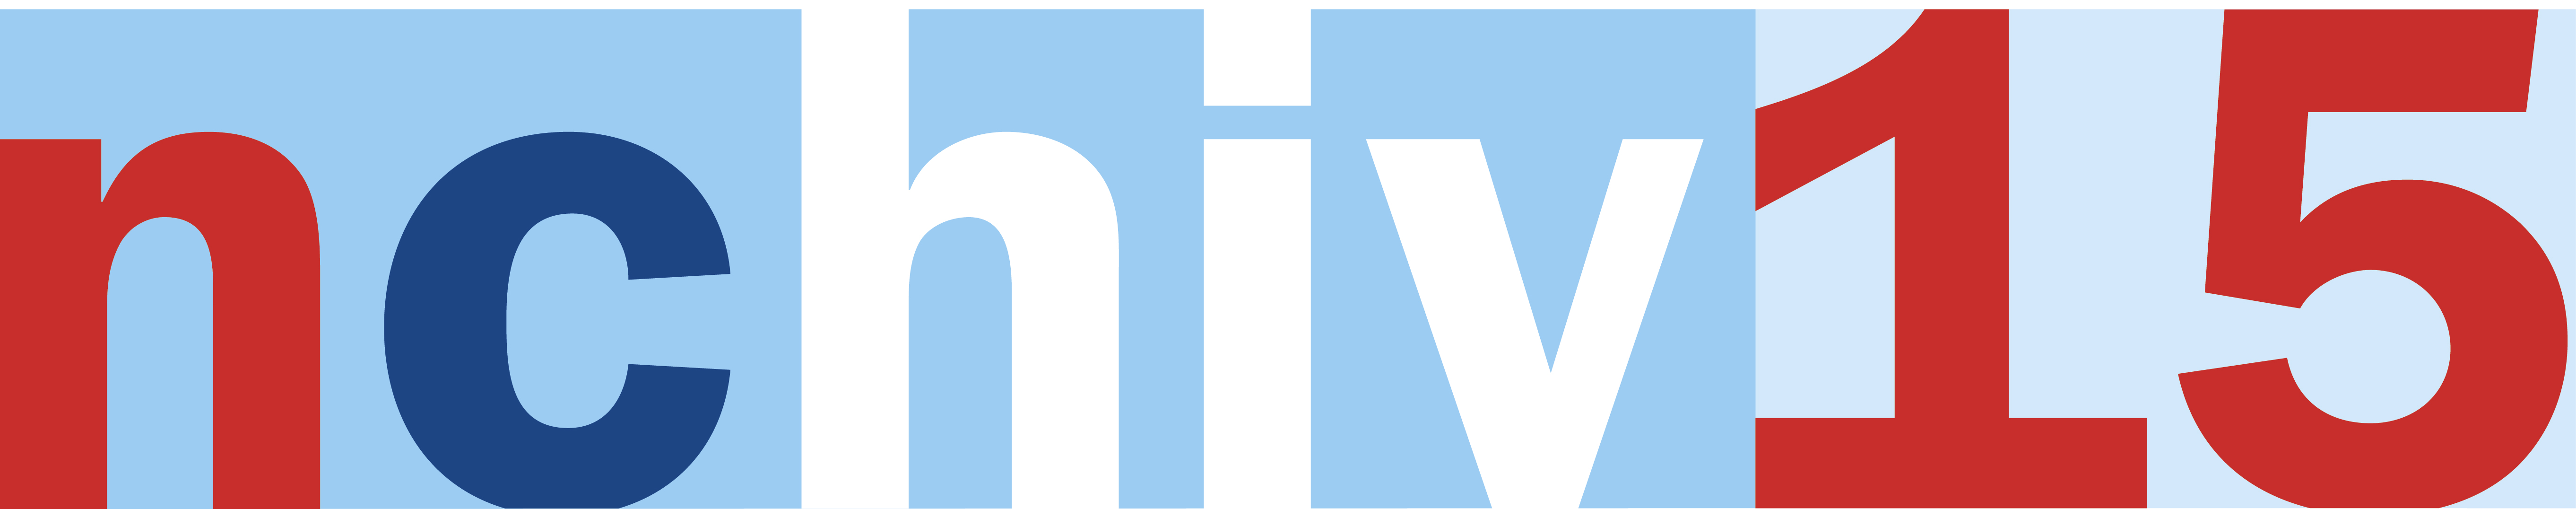 NCHIV-2015-Logo-Groot.jpg